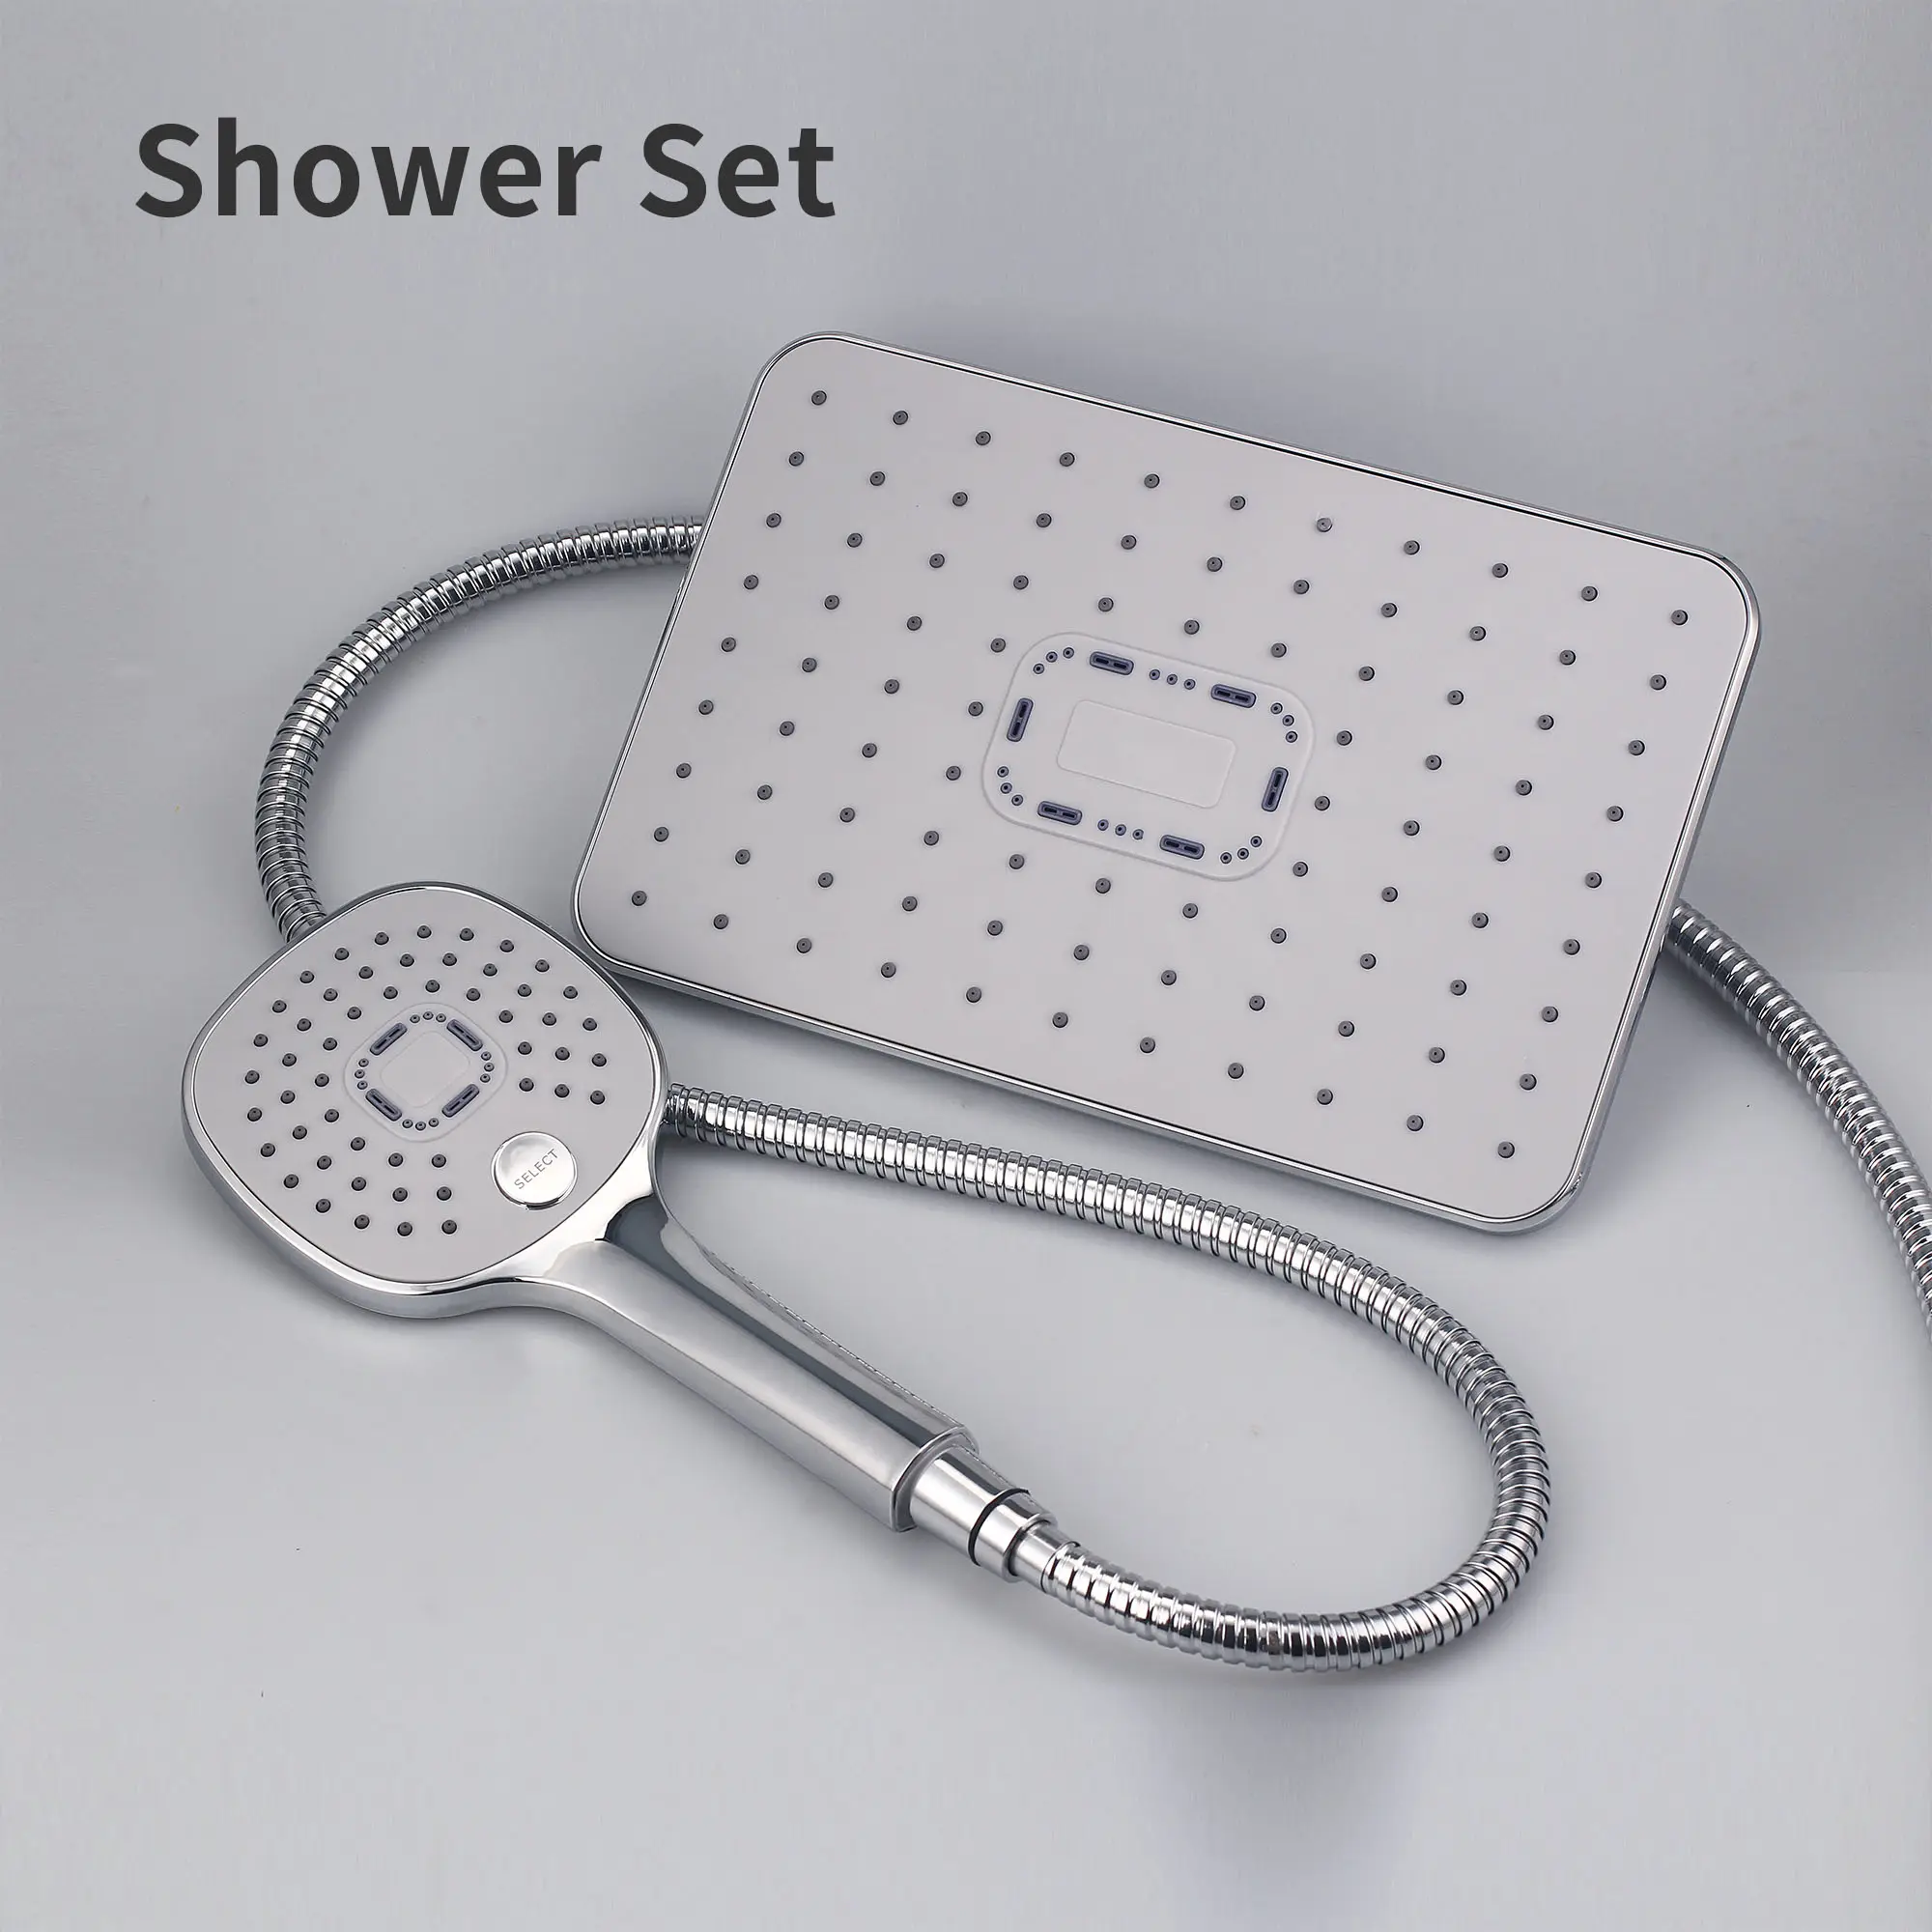 New Bathroom Rainfall 12 Inch Shower Set 3 Settings ABS Chrome Shower Head Set For Bathroom